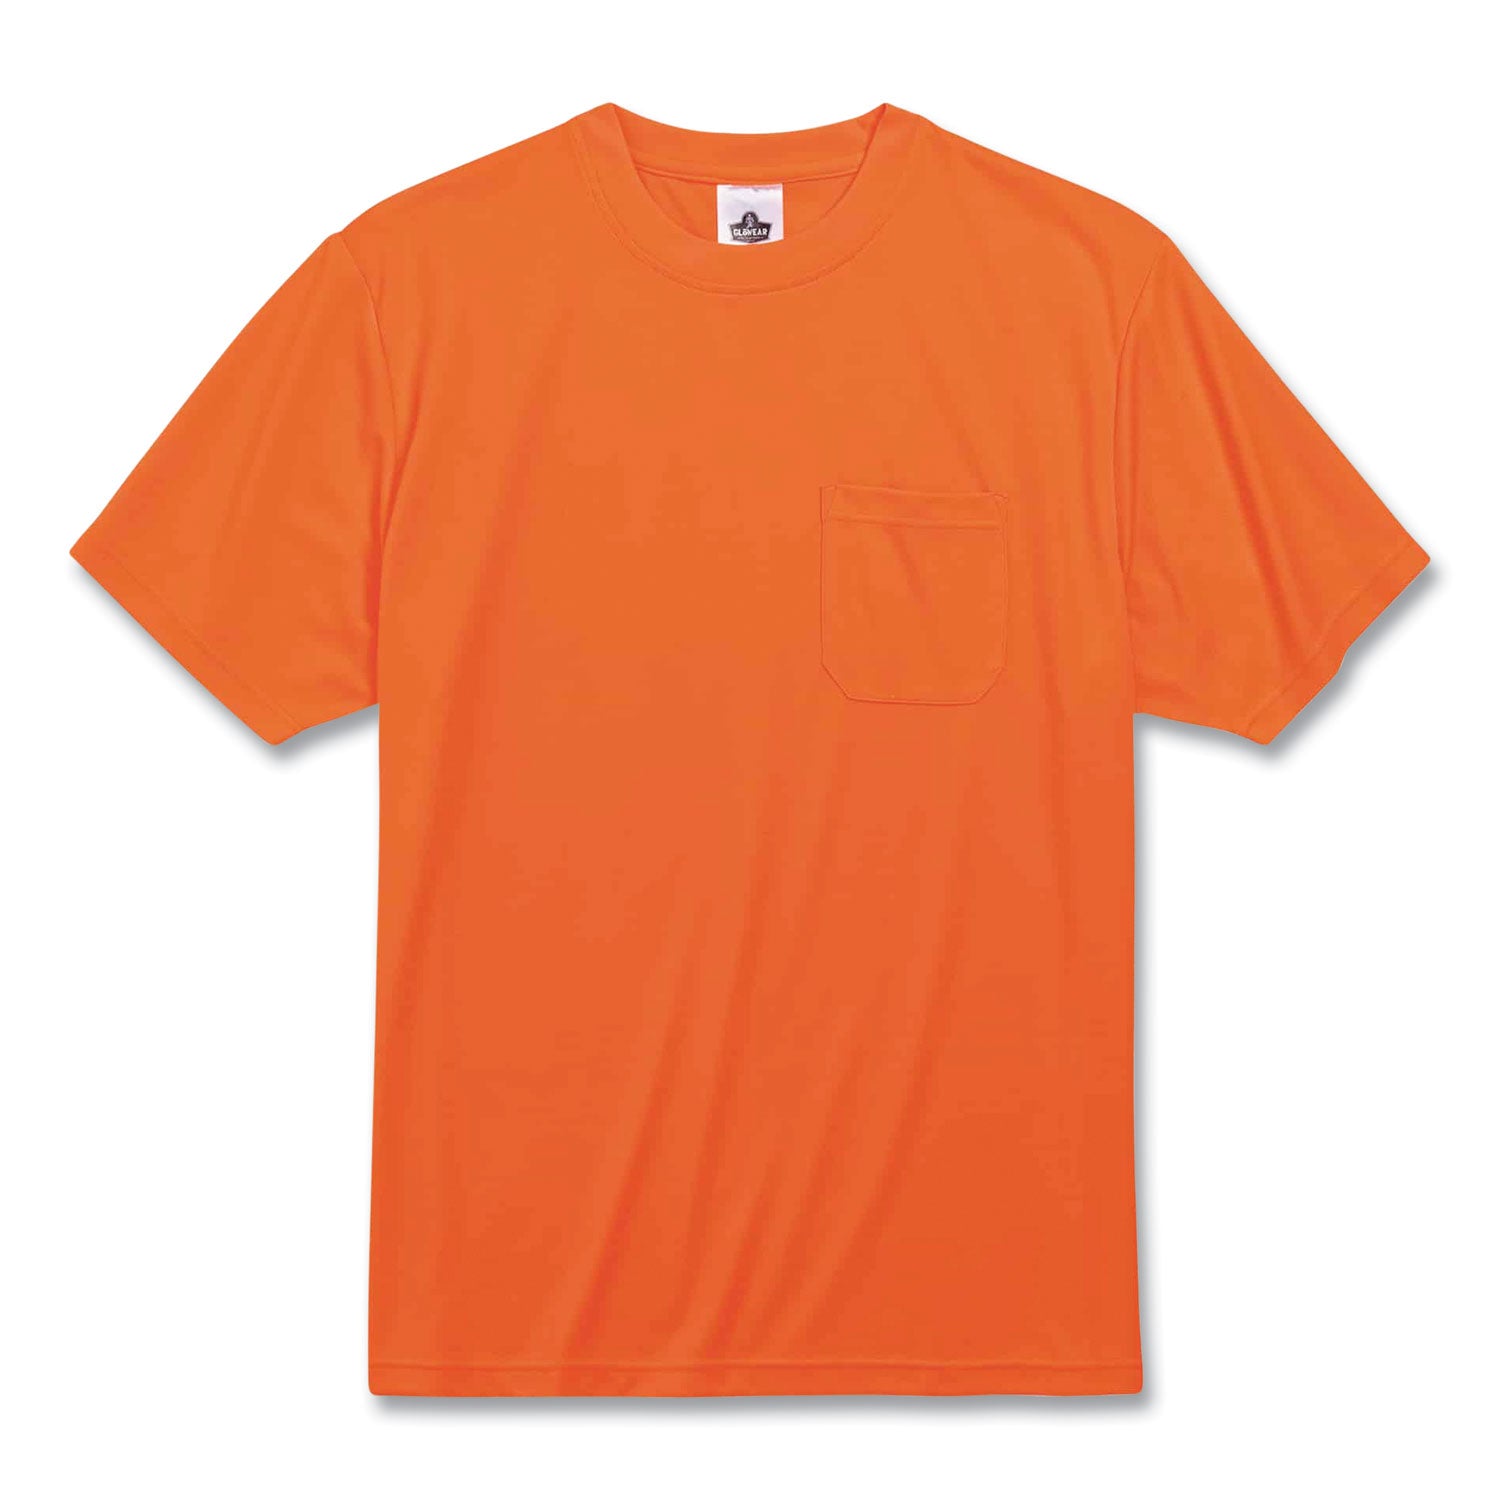 glowear-8089-non-certified-hi-vis-t-shirt-polyester-4x-large-orange-ships-in-1-3-business-days_ego21568 - 1